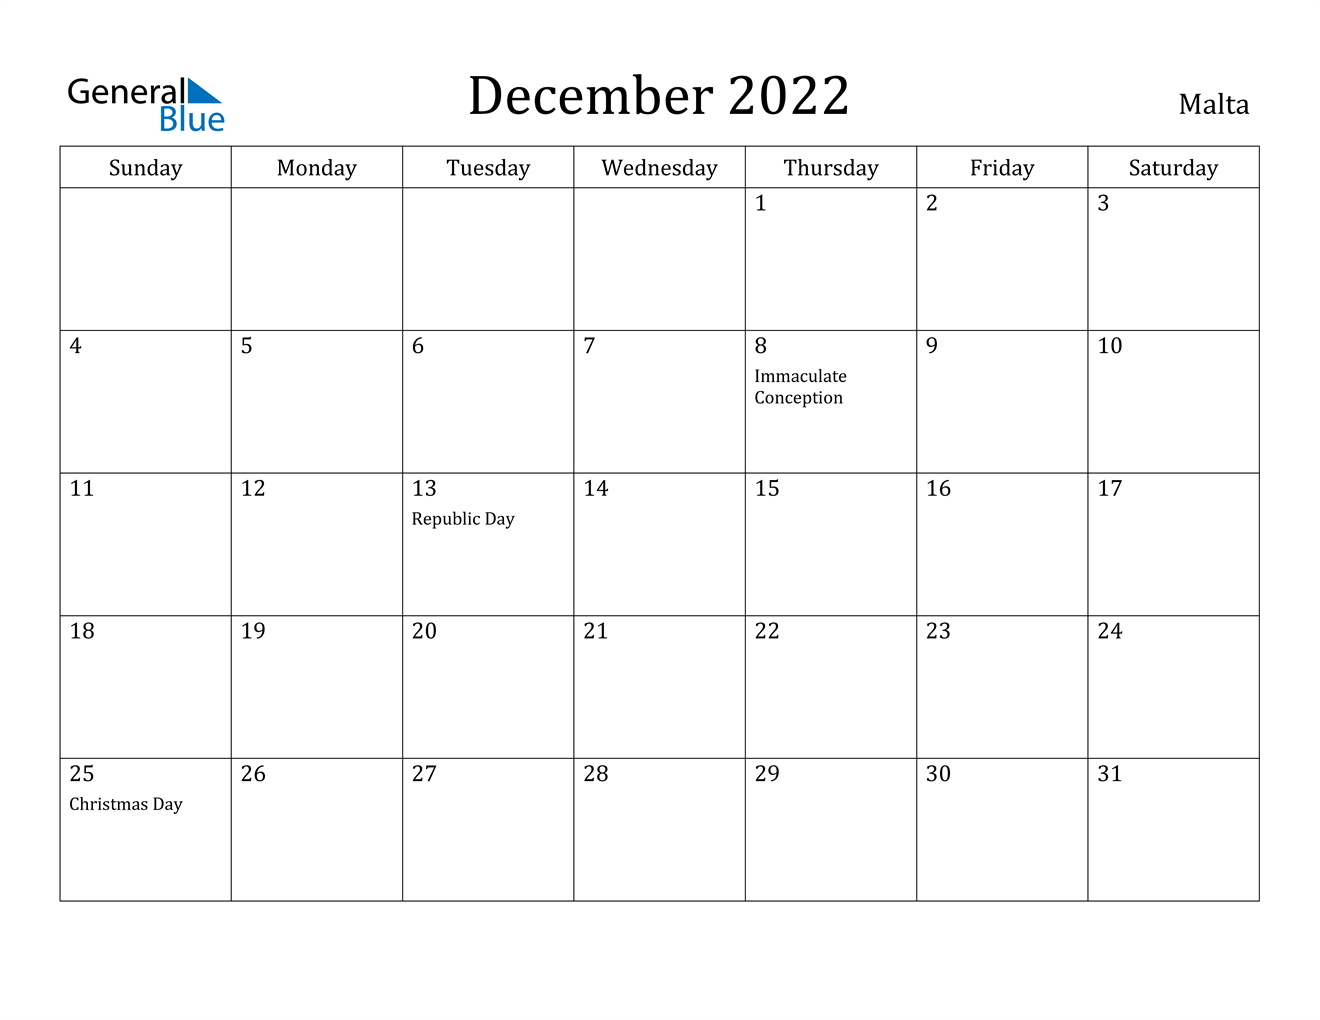 December 2022 Calendar - Malta